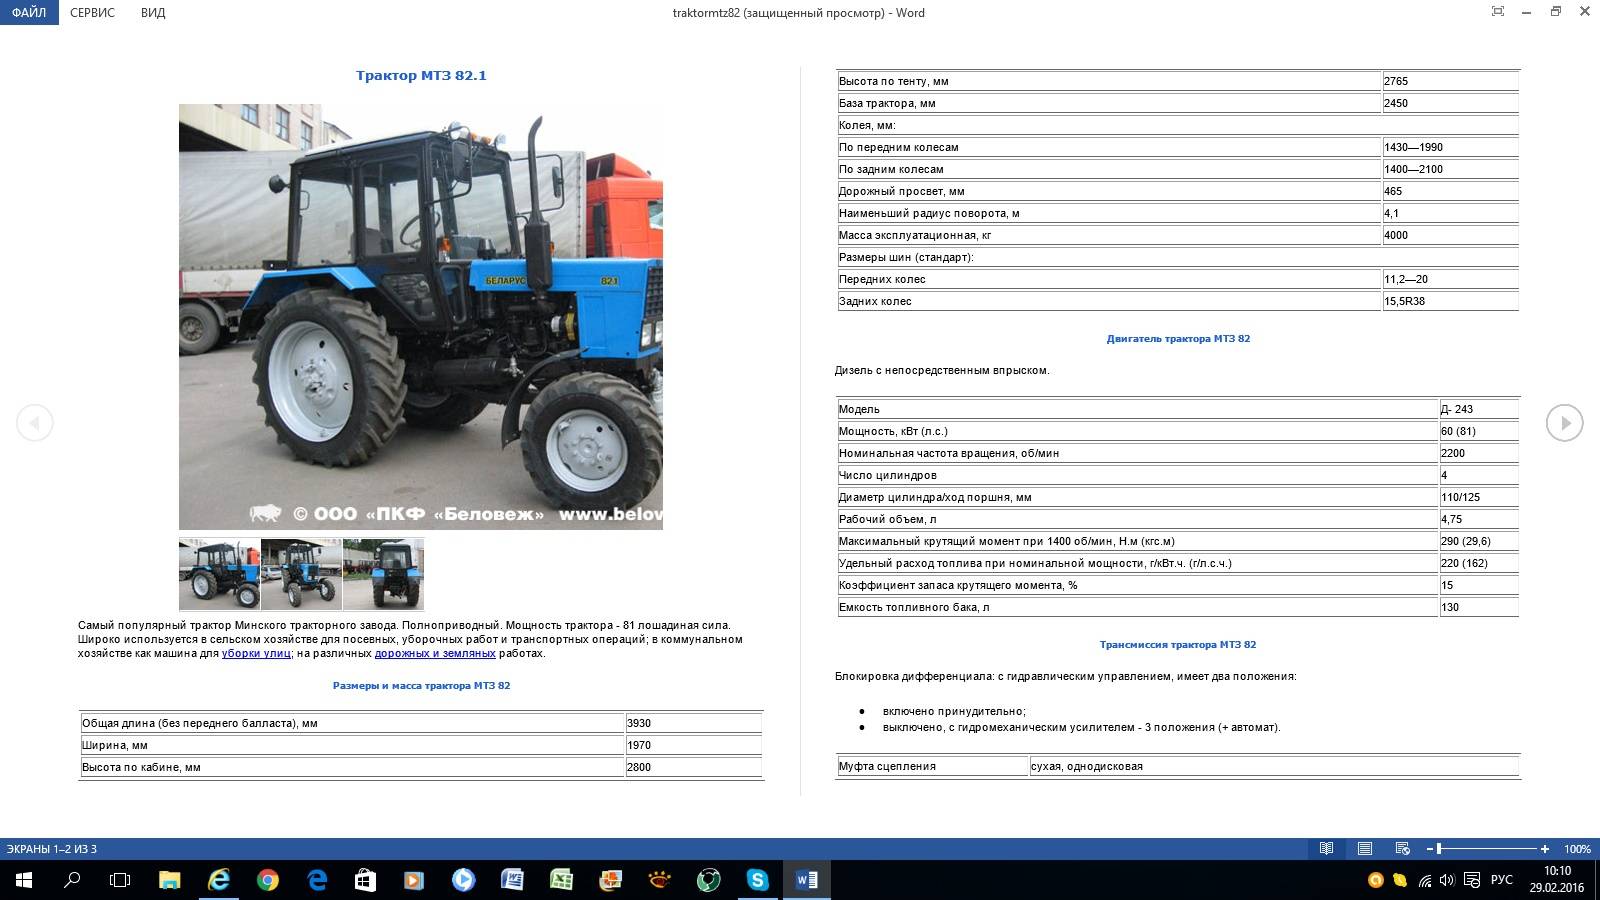 Мтз 82: вес трактора и прочие характеристики